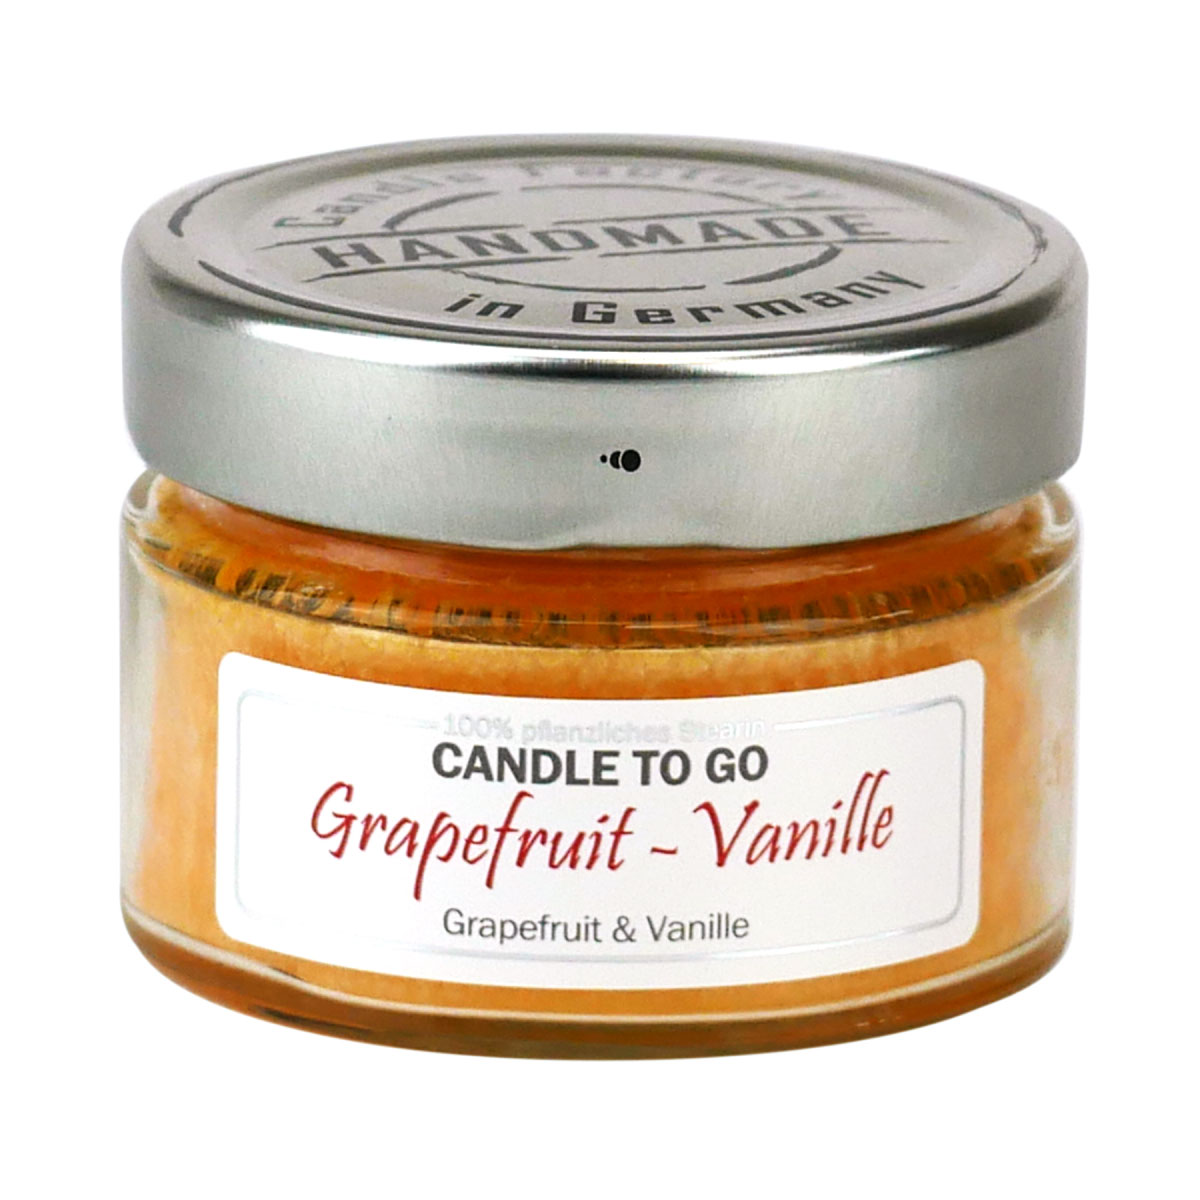 Grapefruit Vanille - Candle to Go Duftkerze von Candle Factory